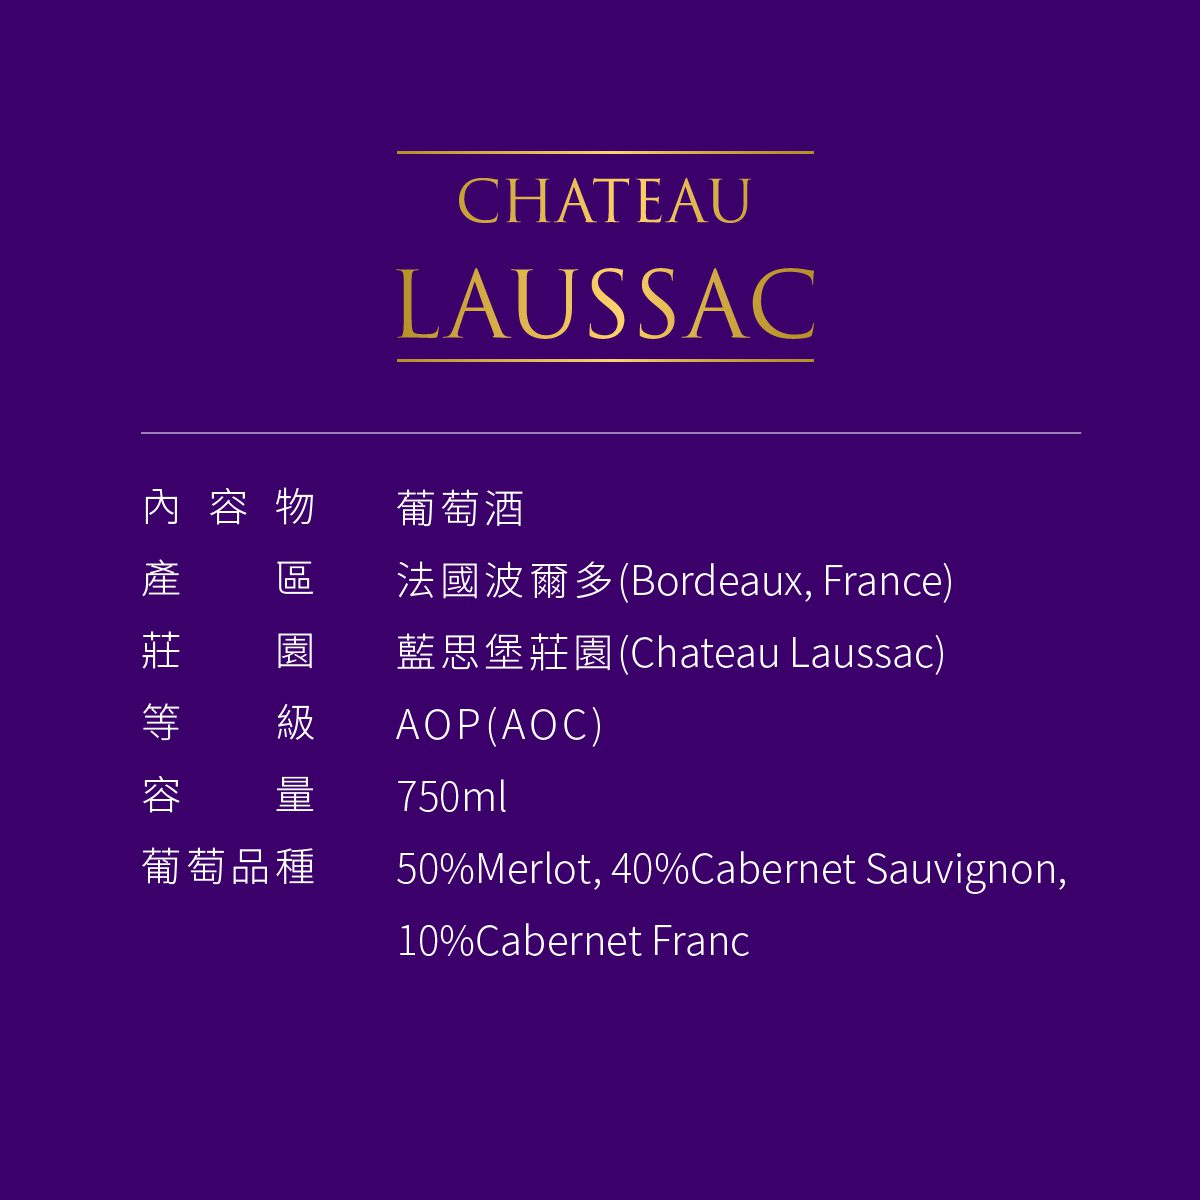 Chateau Laussac 藍思堡莊園 商品資訊 內容物:葡萄酒 產區: 法國波爾多(Bordeaux, France) 莊園: 藍思堡莊園(Chateau Laussac) 等級: AOP (AOC) 容量: 750ml 葡萄品種: 50%Merlot, 40%Carbernet Sauvignon, 10% Carbernet Franc